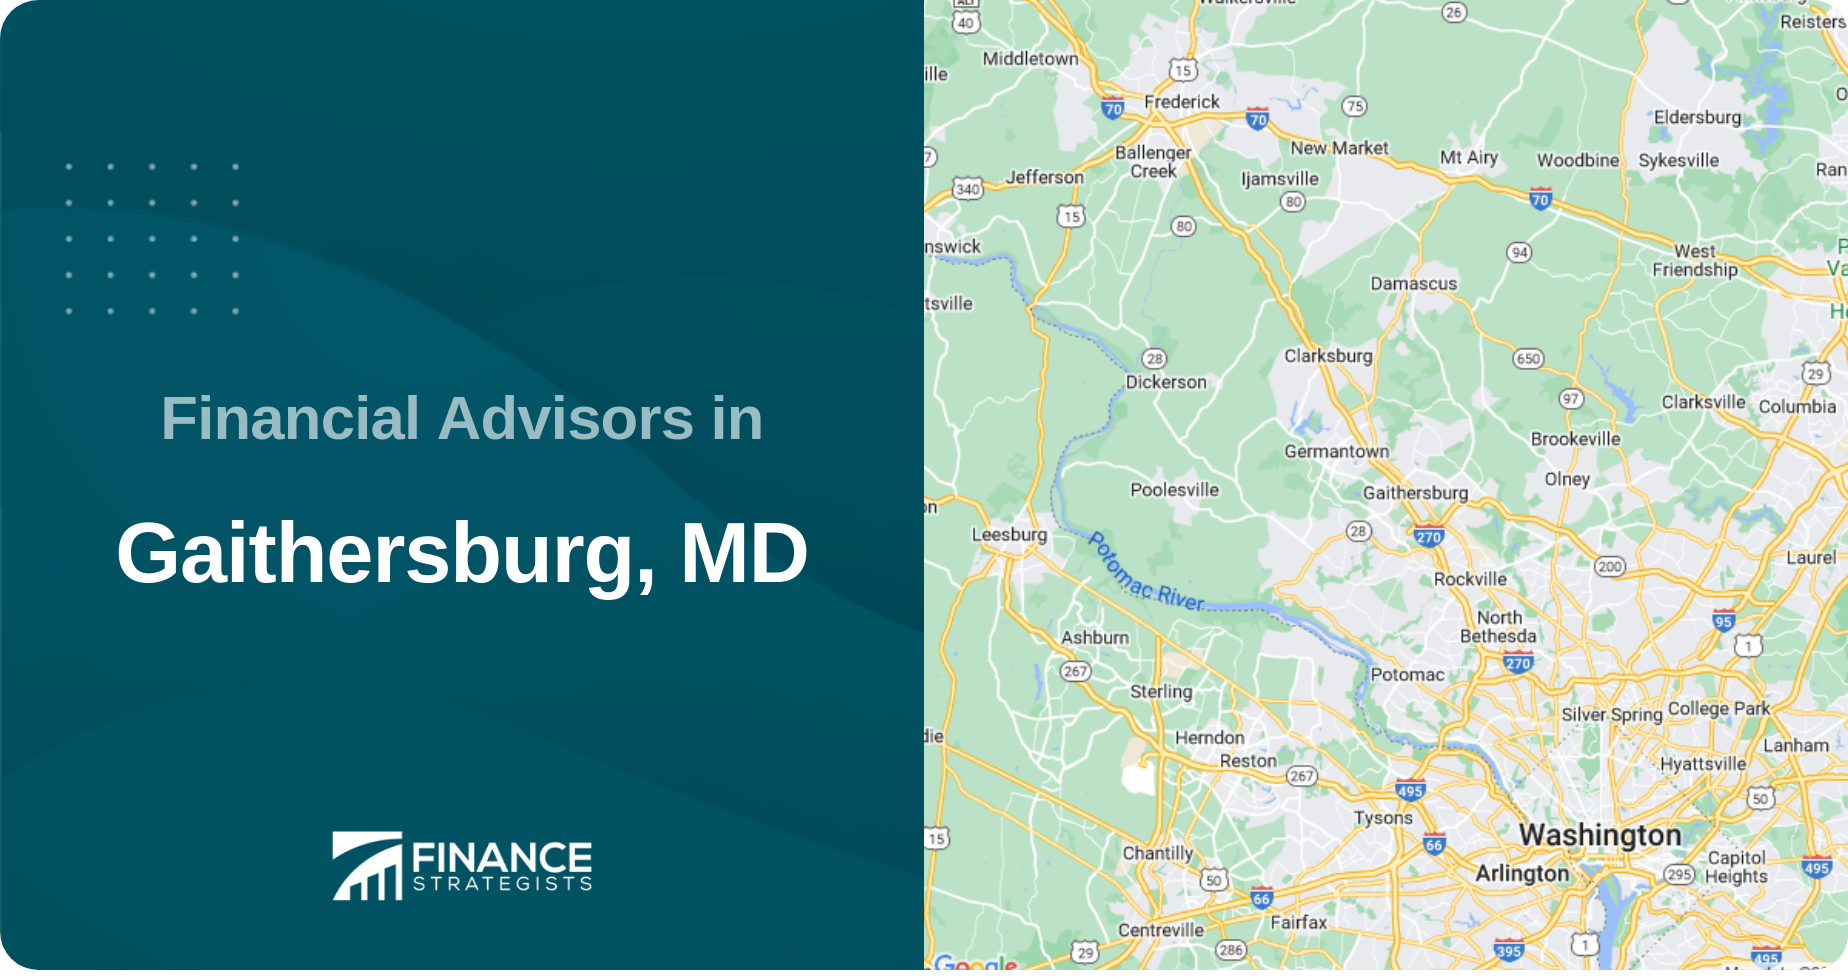 Financial Advisors in Gaithersburg, MD